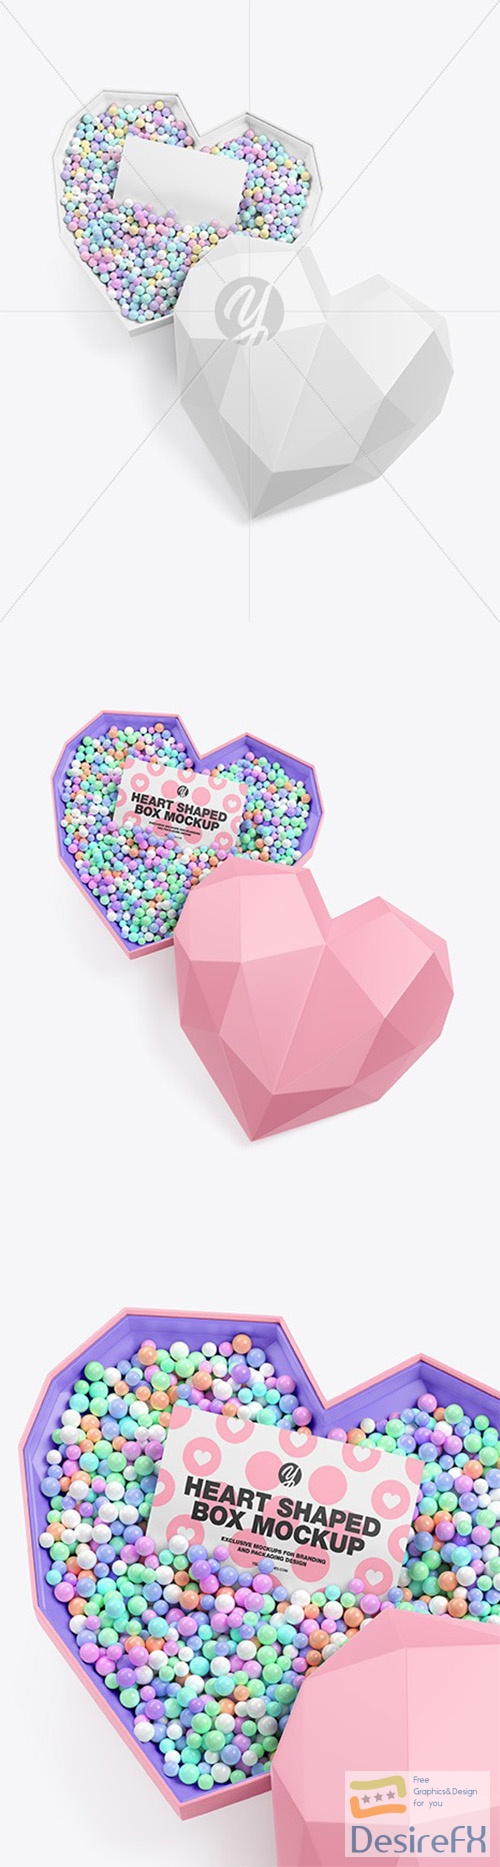 Heart Shaped Box with Card Mockup 97196